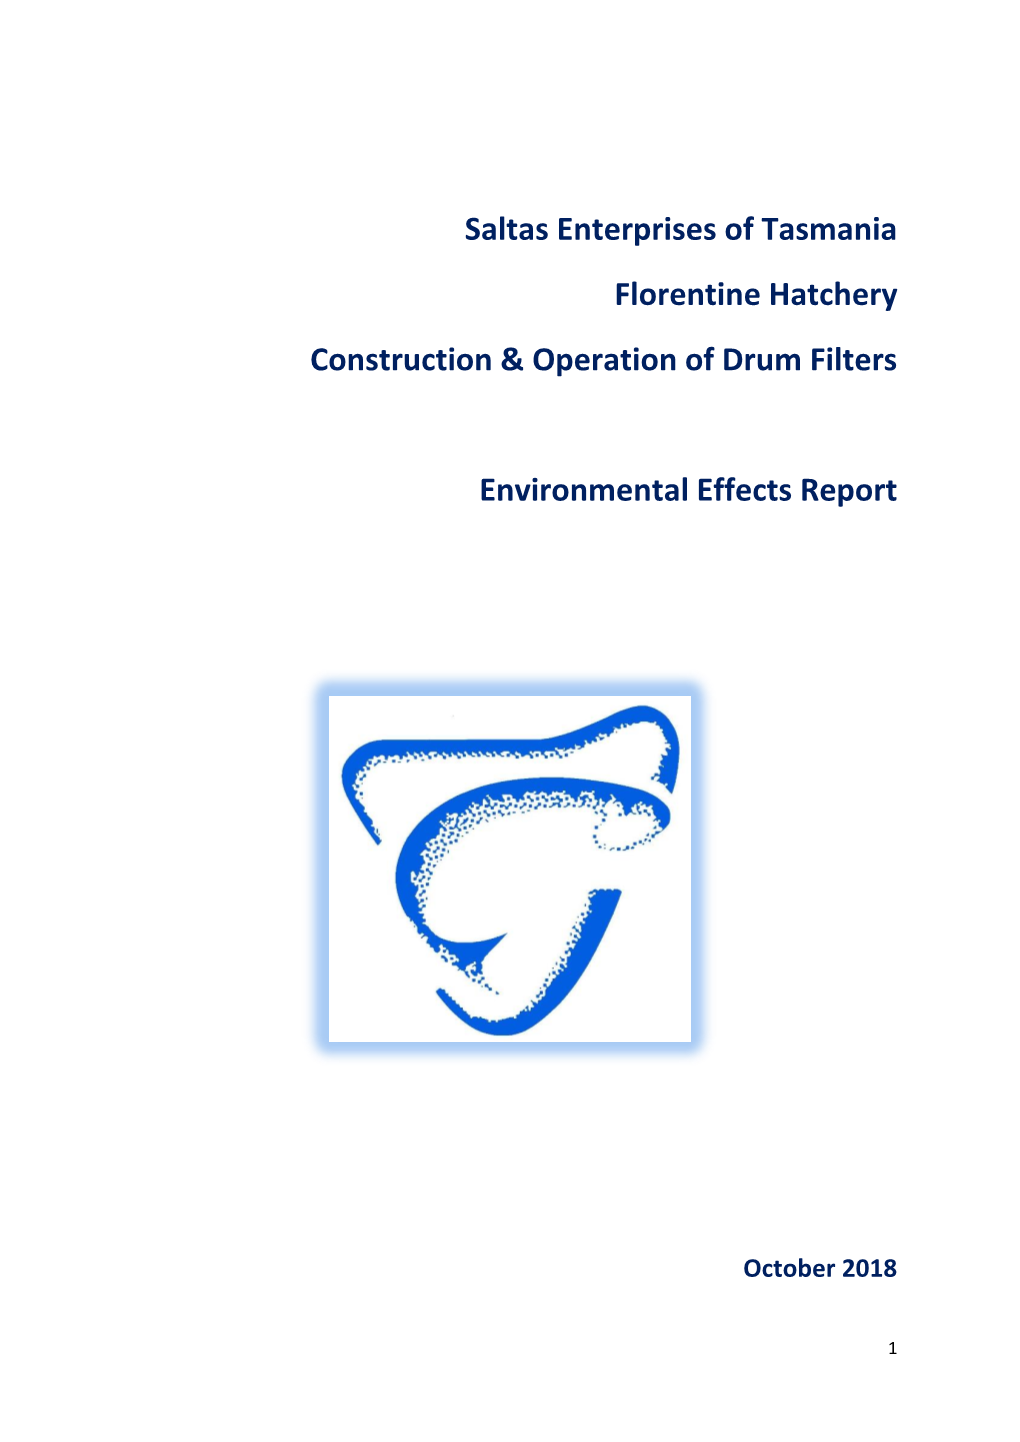 Saltas Enterprises of Tasmania, Drum Filter Project, Florentine Hatchery